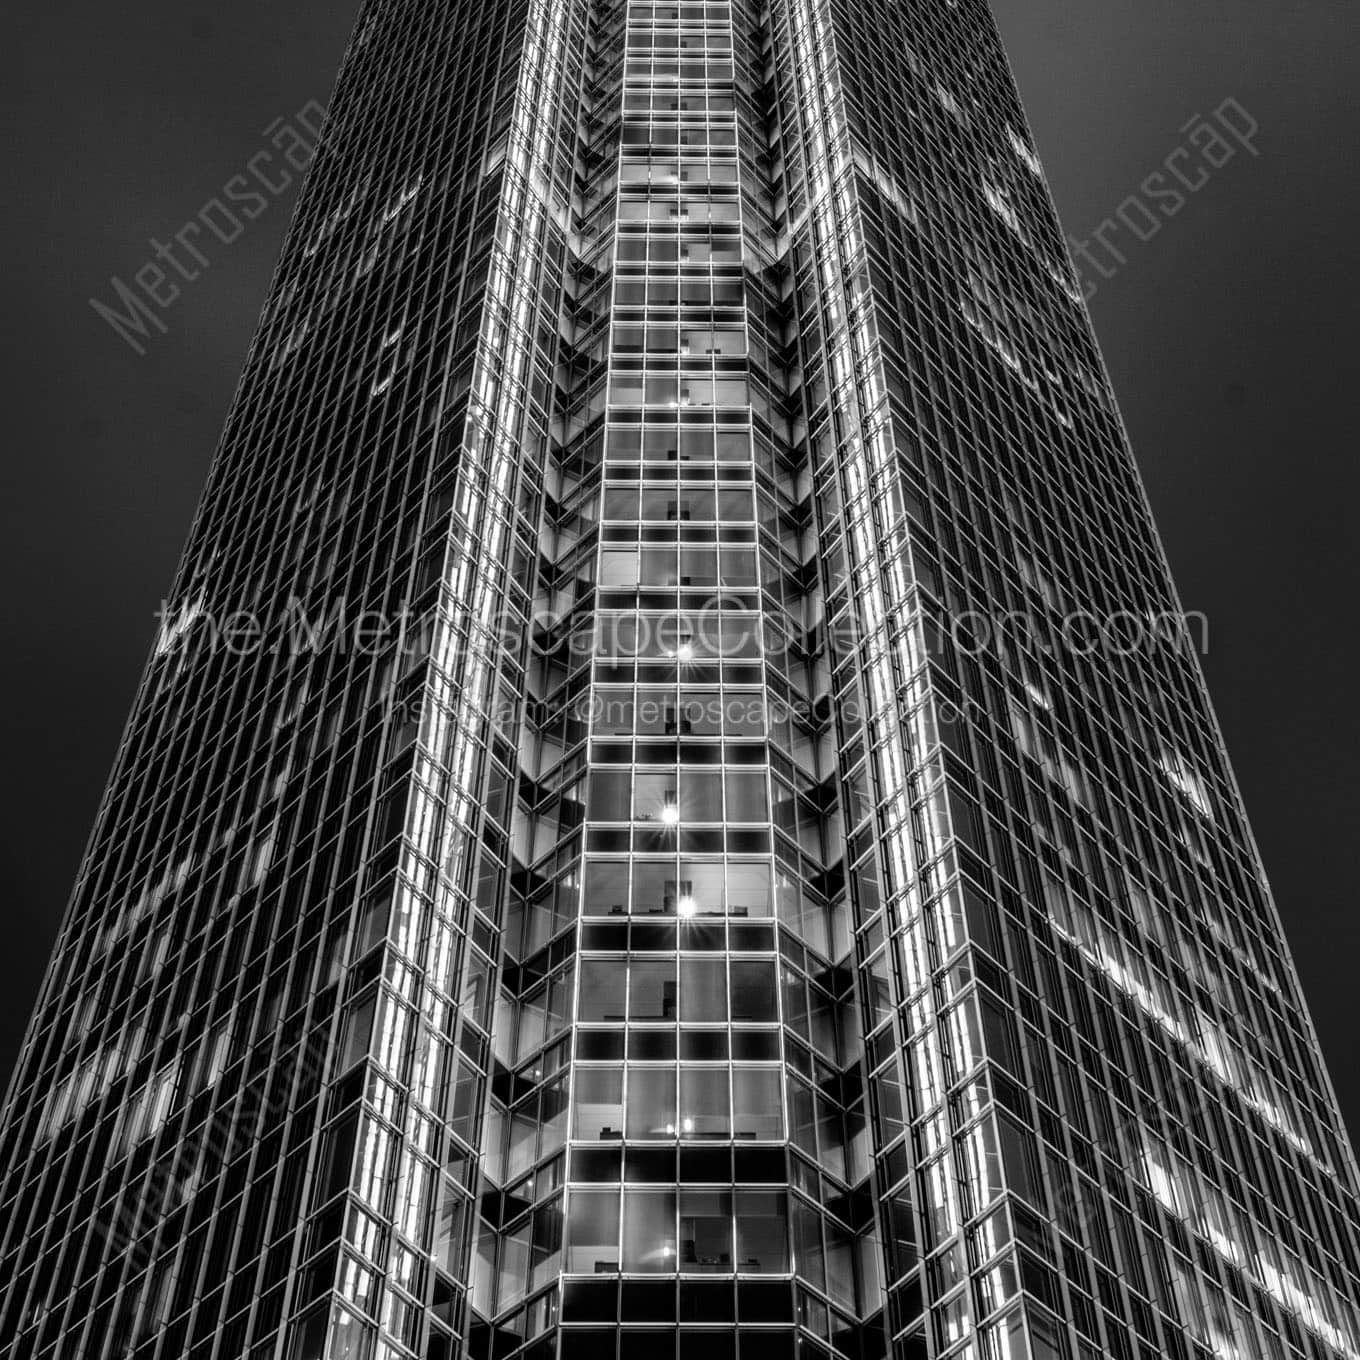 okc devon tower Black & White Office Art